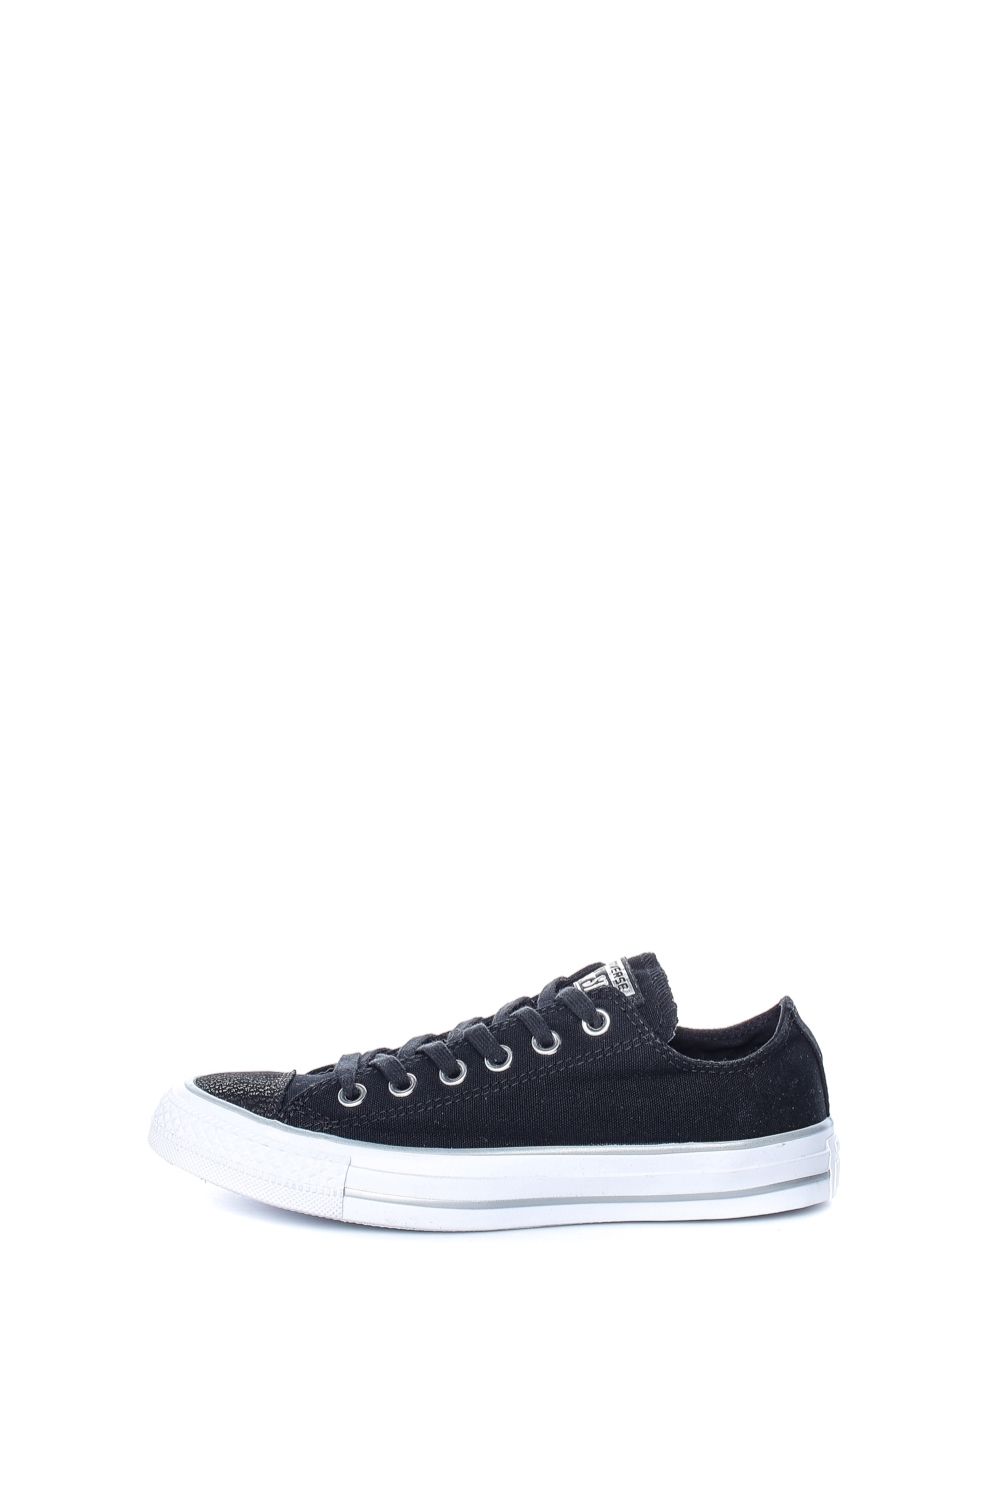 CONVERSE - Γυναικεία παπούτσια Chuck Taylor All Star Ox μαύρα Γυναικεία/Παπούτσια/Sneakers